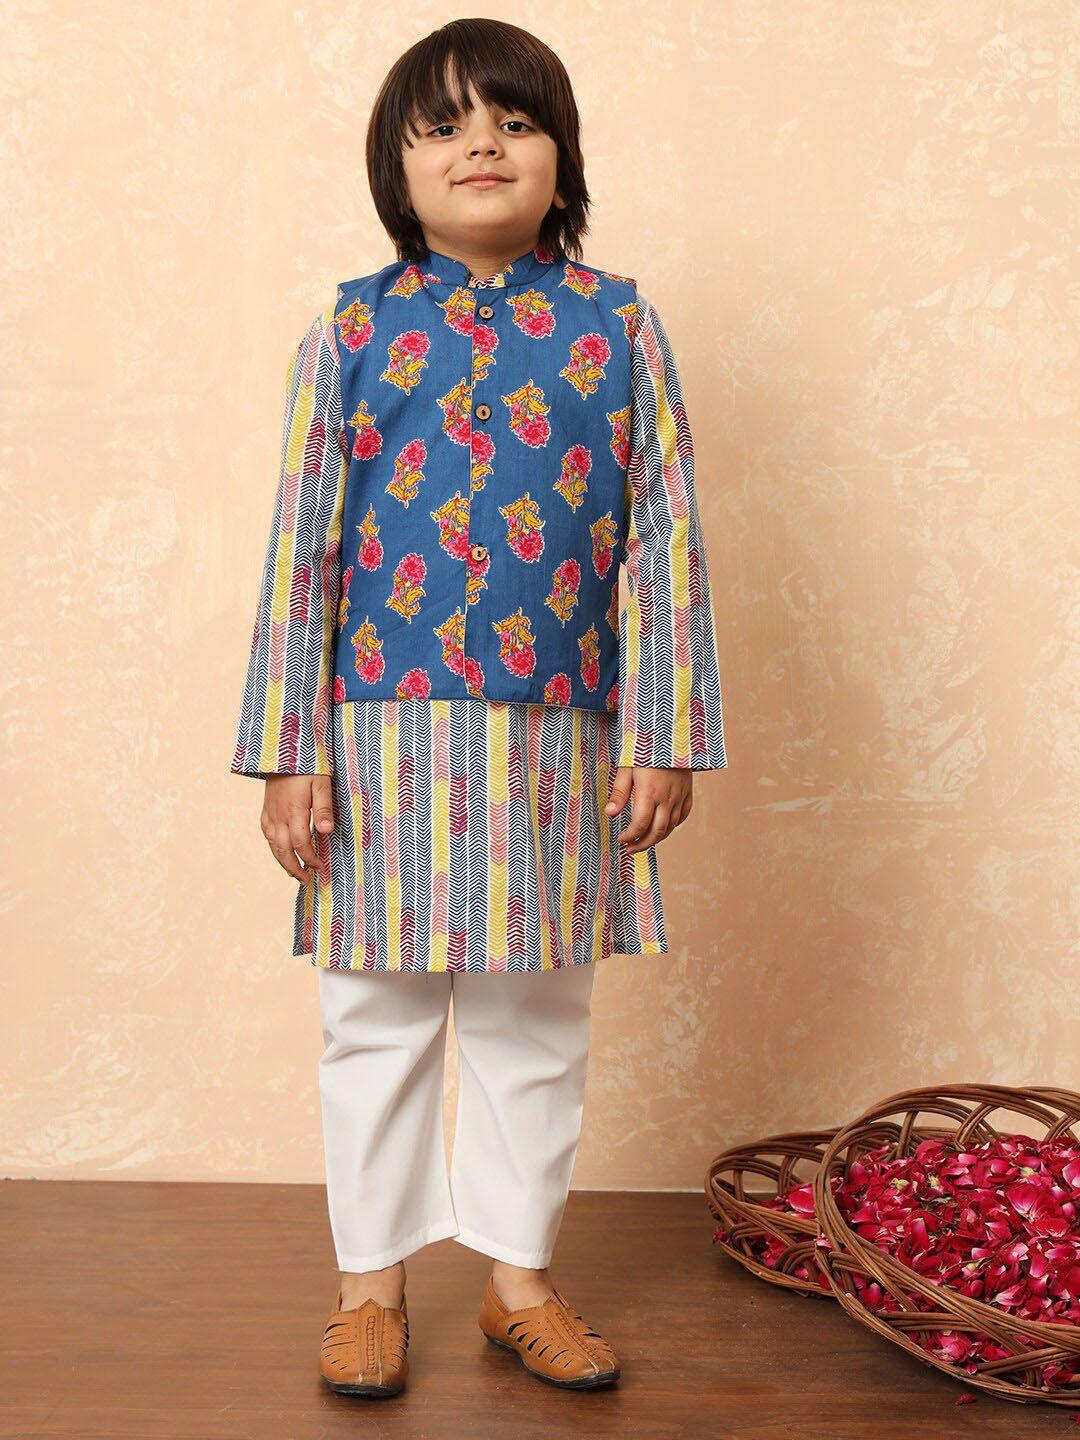 readiprint-fashions-boys-blue-floral-printed-regular-pure-cotton-kurta-with-pyjamas